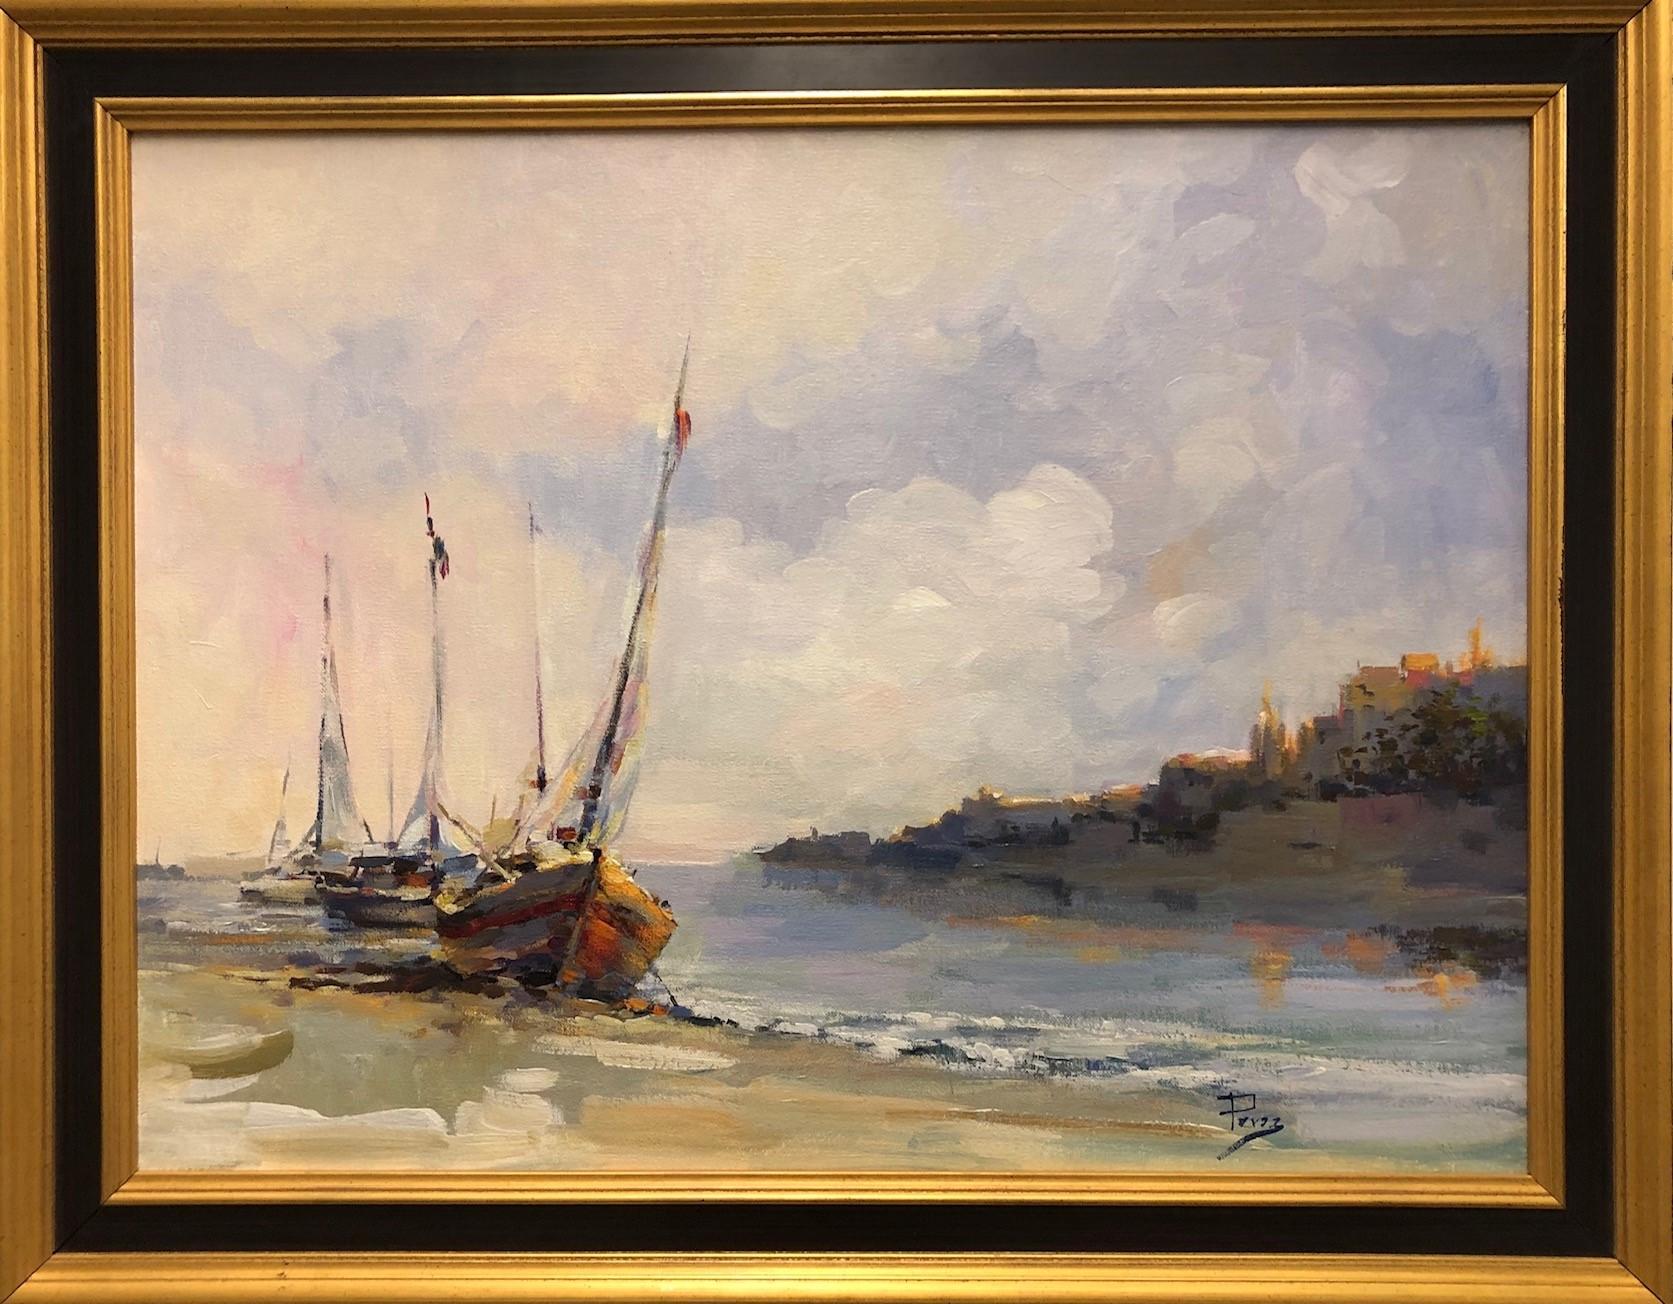 Alex Perez Landscape Painting - "Soft Light Boats" Framed-Original Oil on Canvas, Signed by Artist